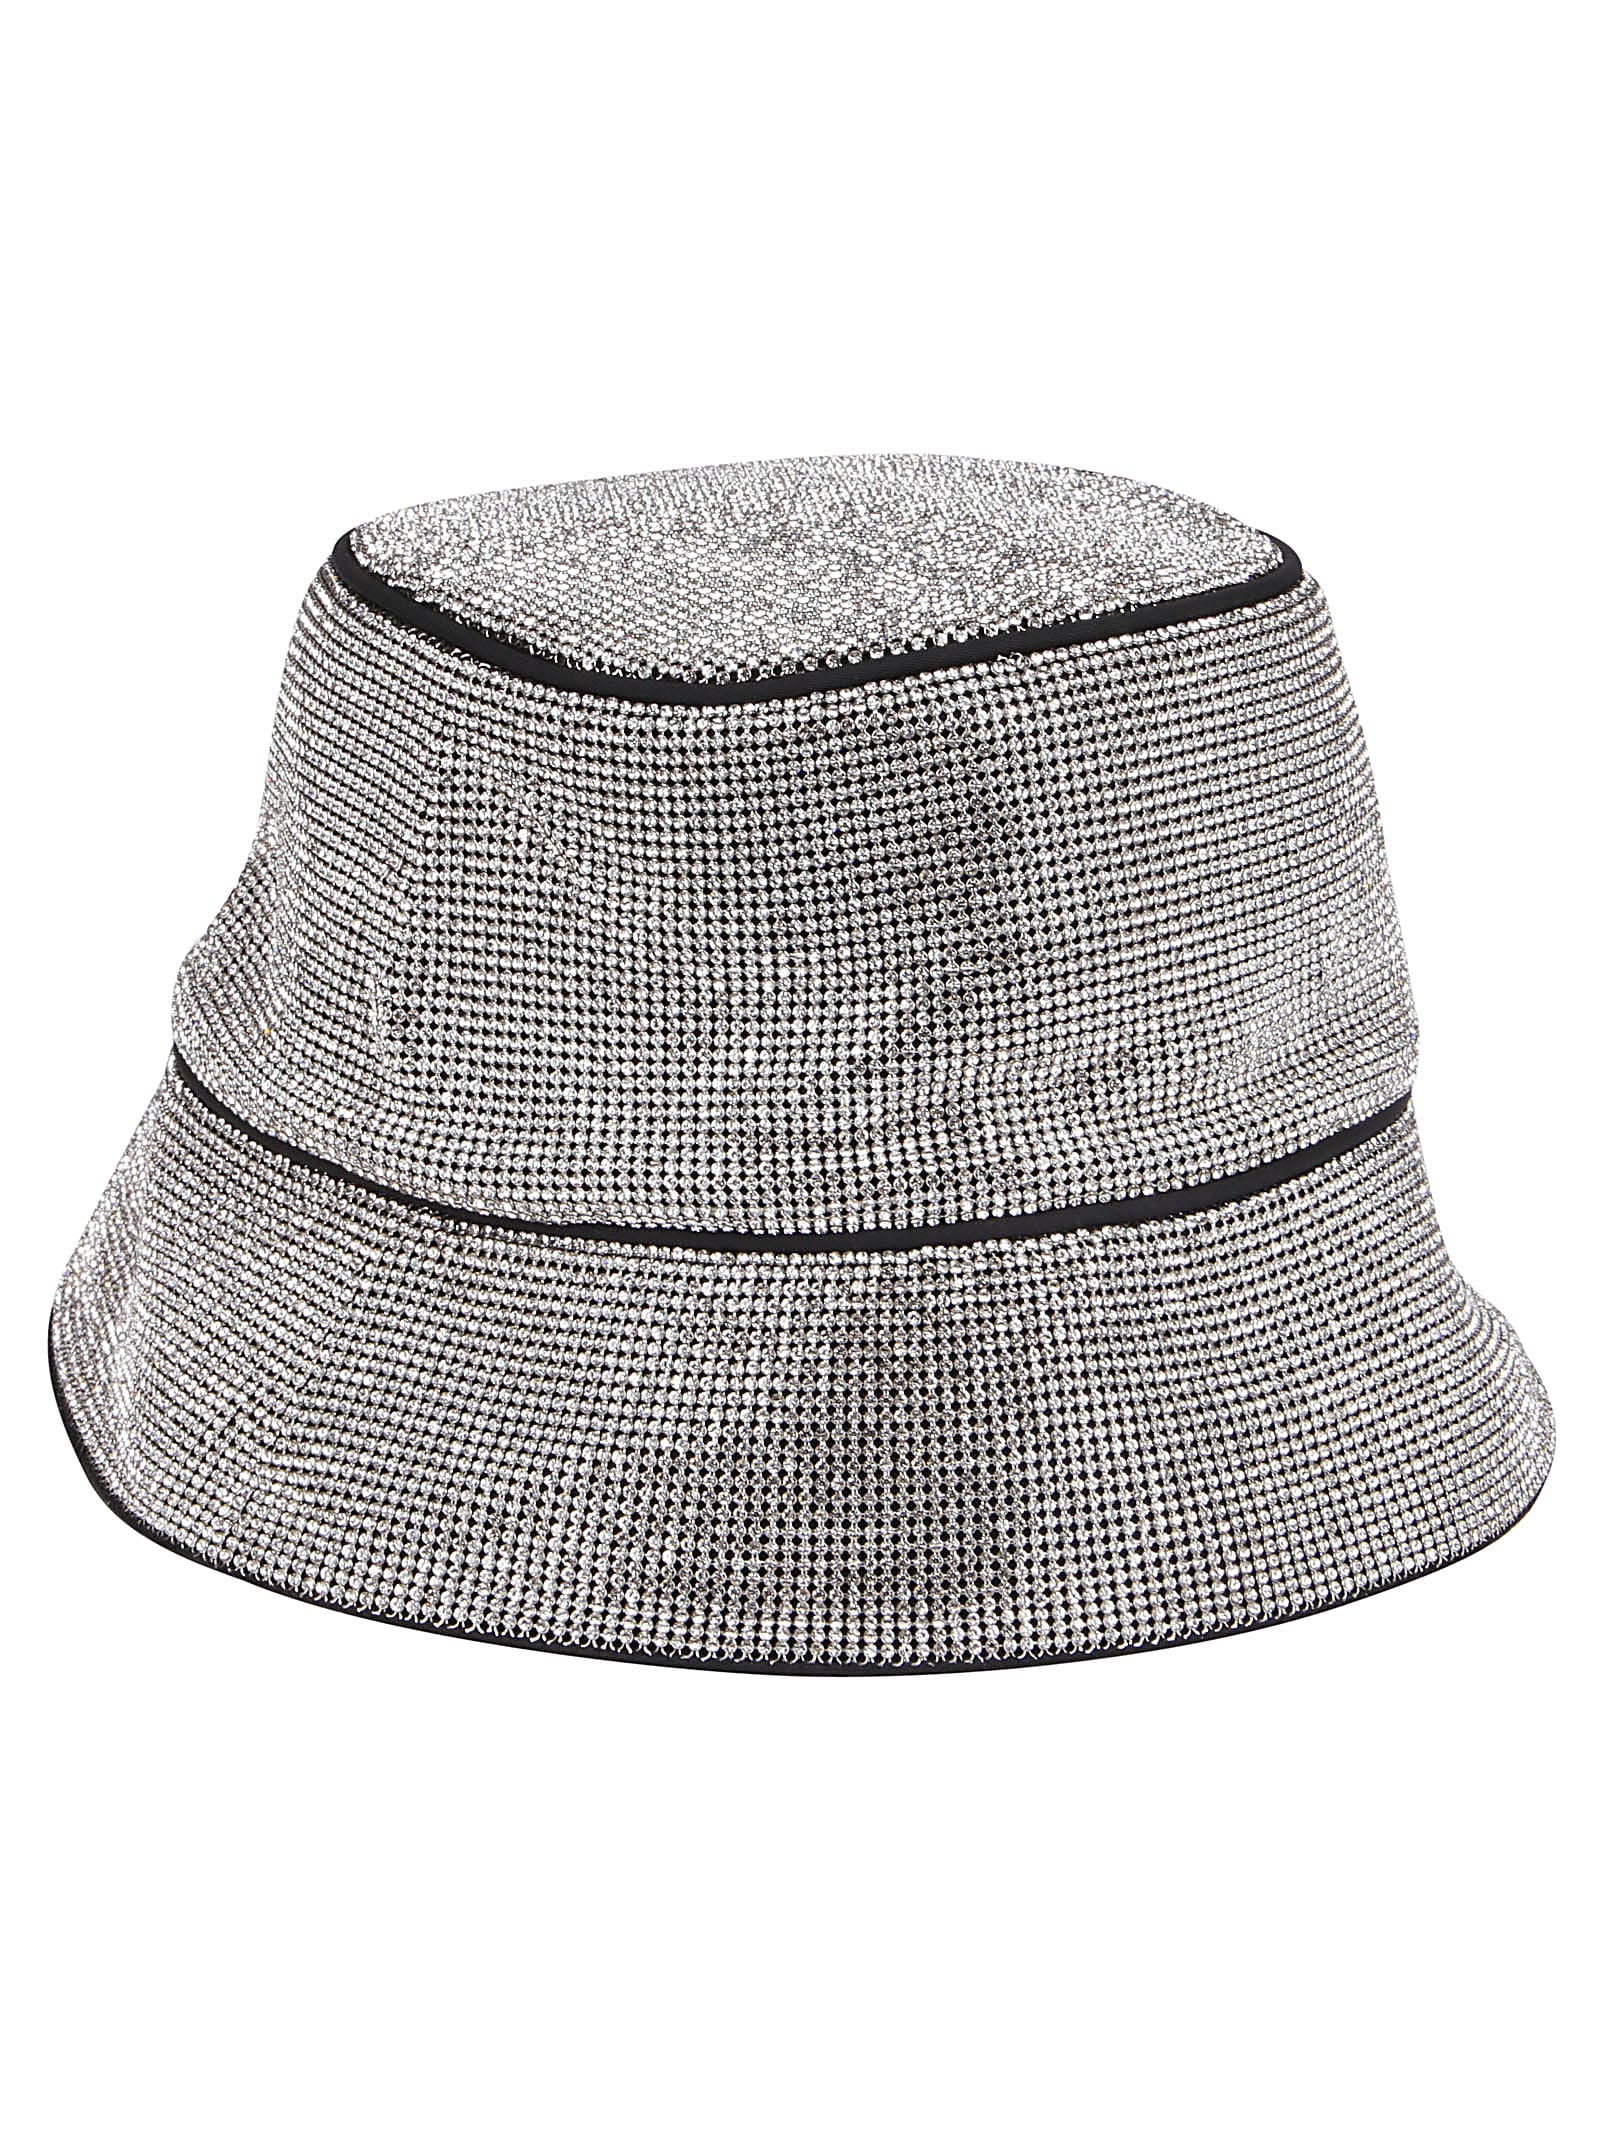 Kara Silevr-tone Bucket Hat